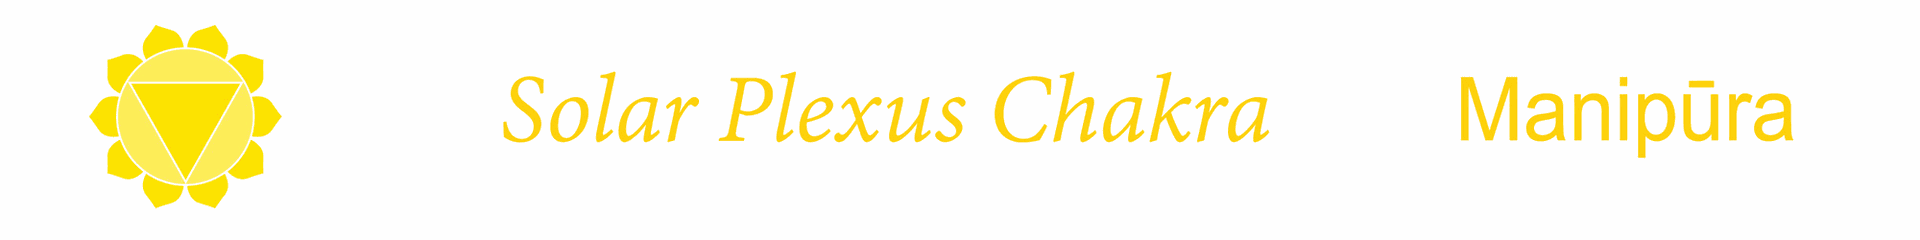 solar plexus chakra image